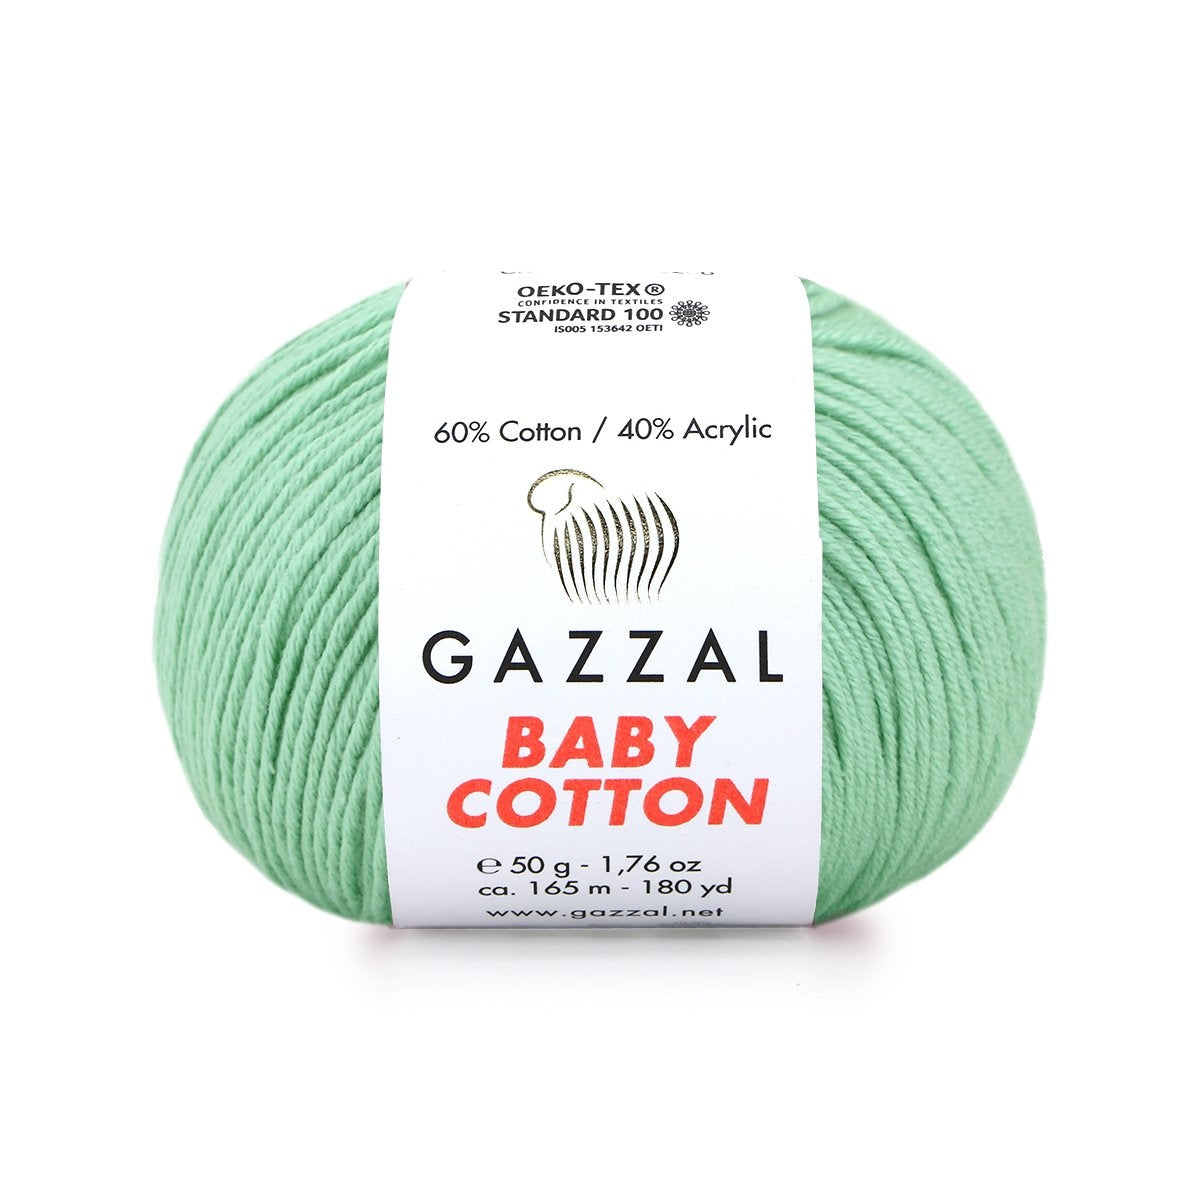 Gazzal Baby Cotton siūlai 50g (medvilnė, akrilanas)